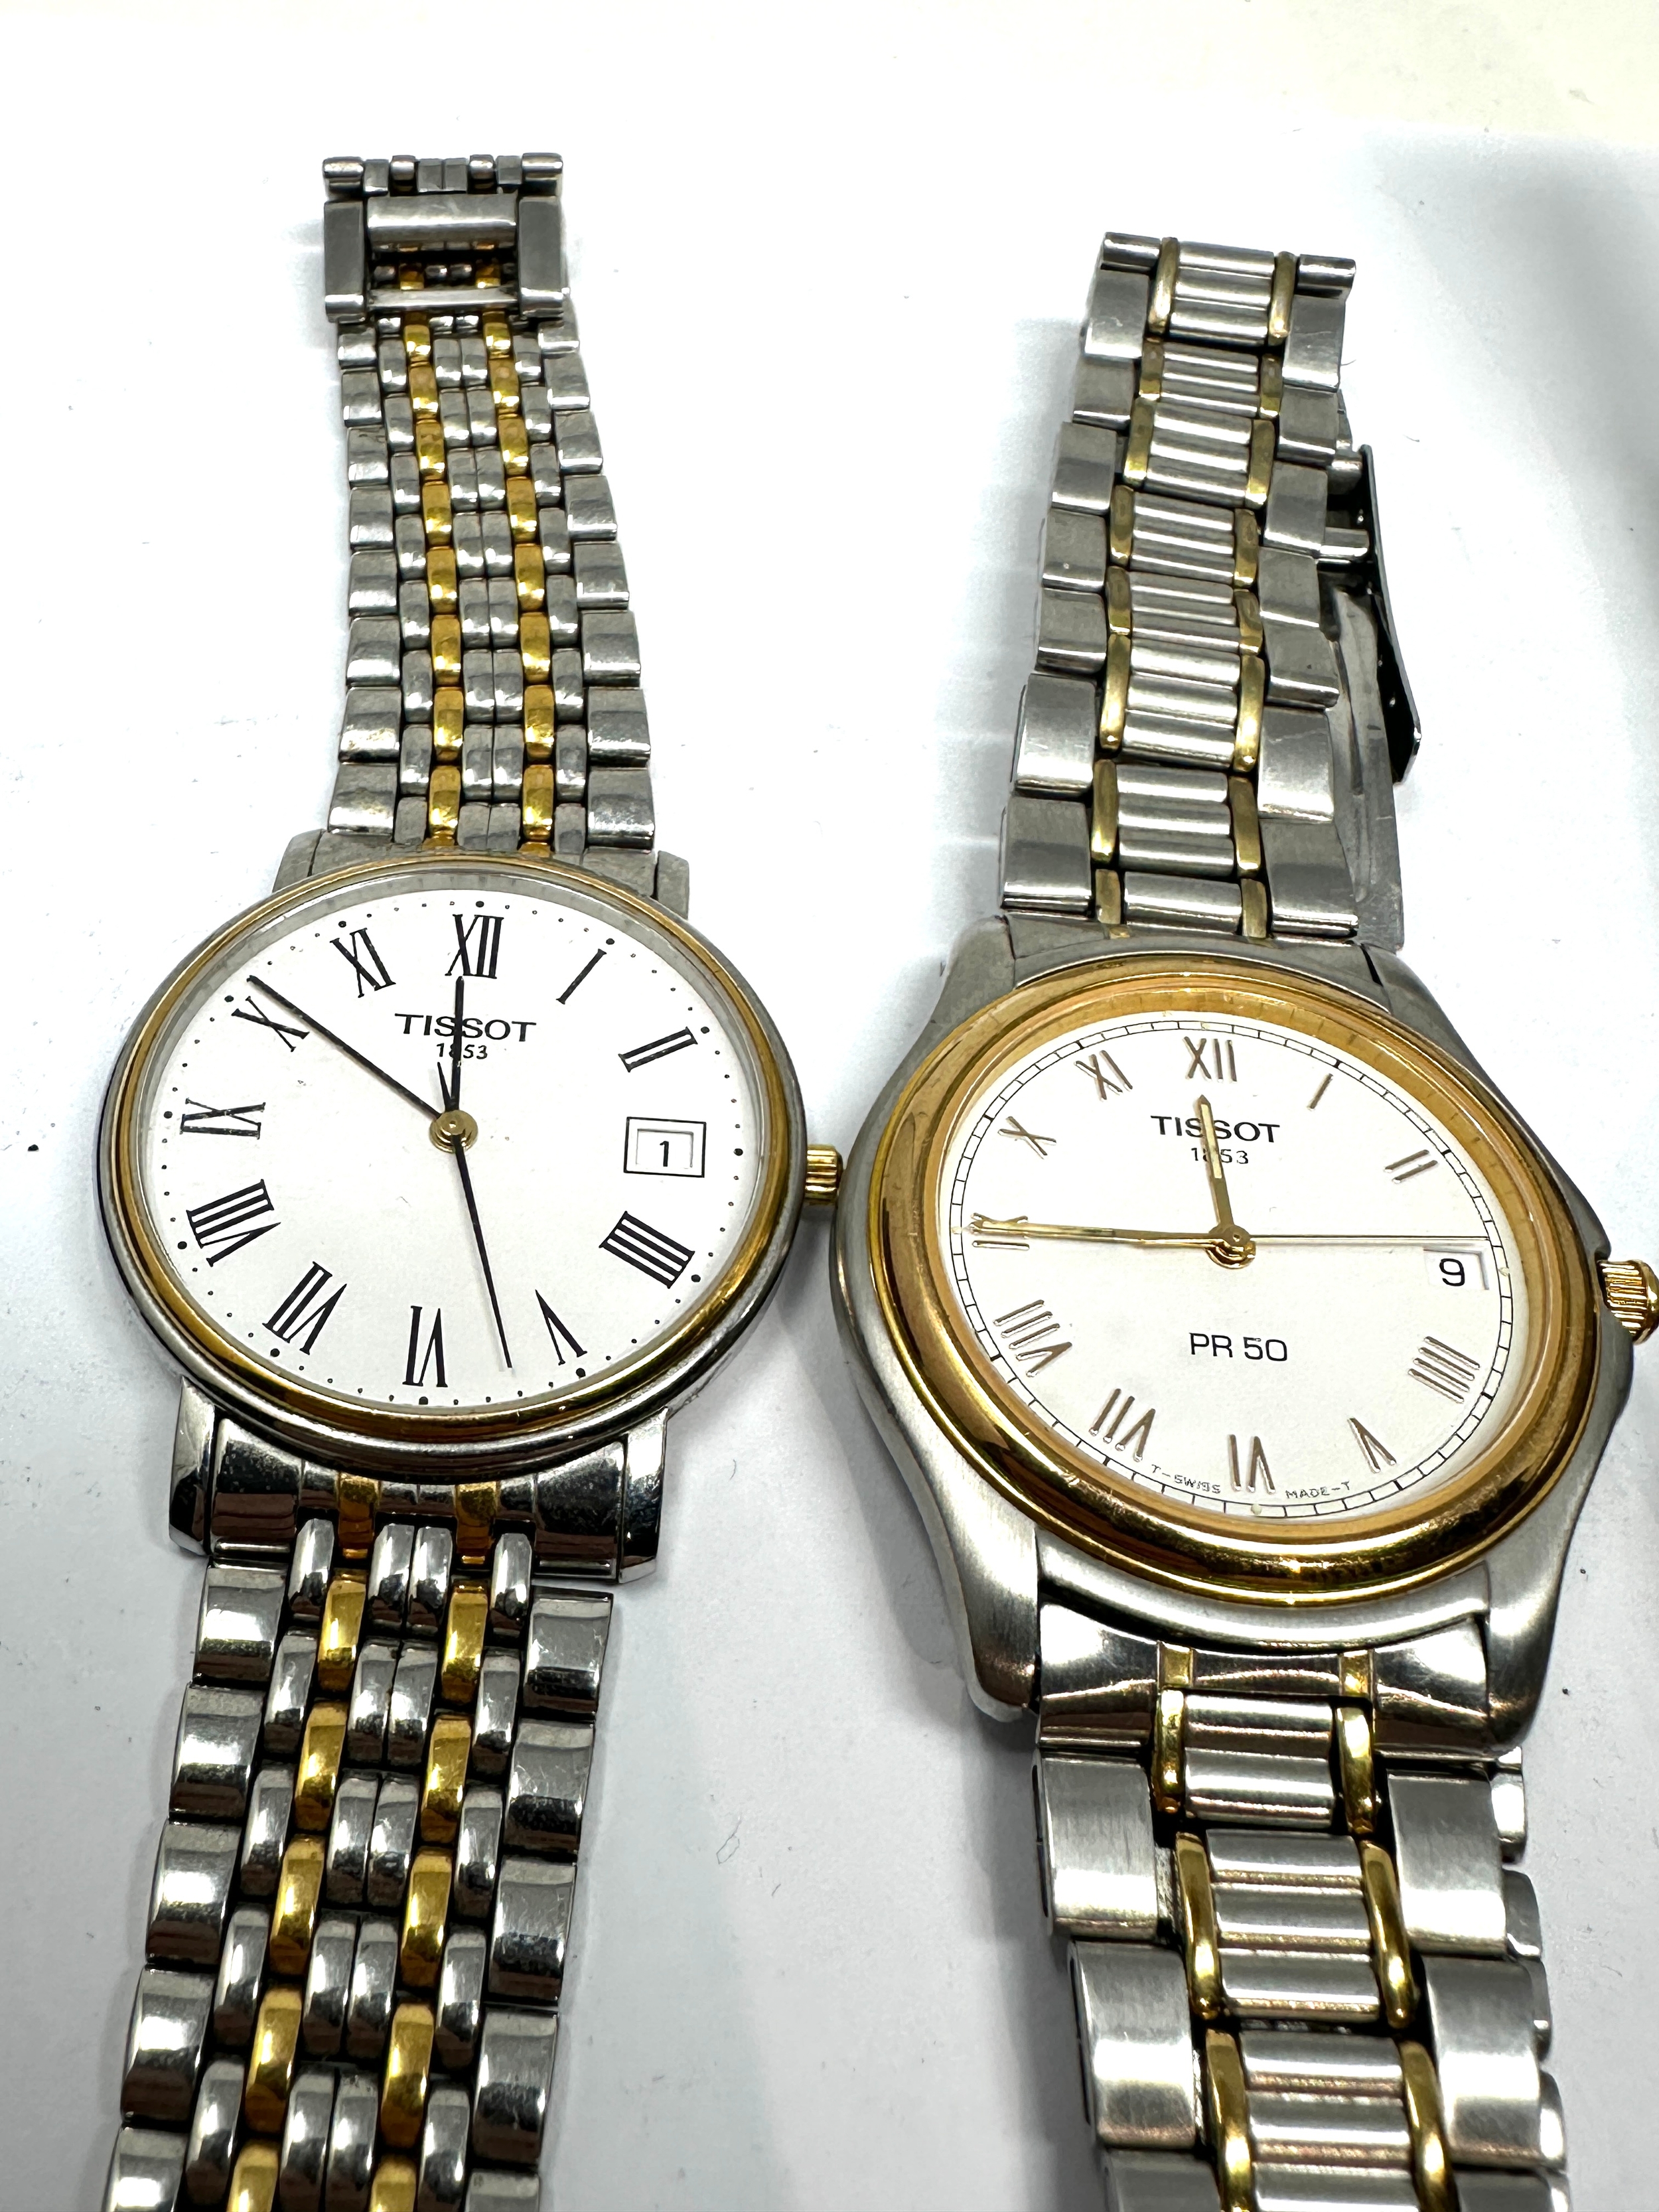 4 gemts quartz wristwatches tissot 1853 & seiko untested - Image 2 of 4